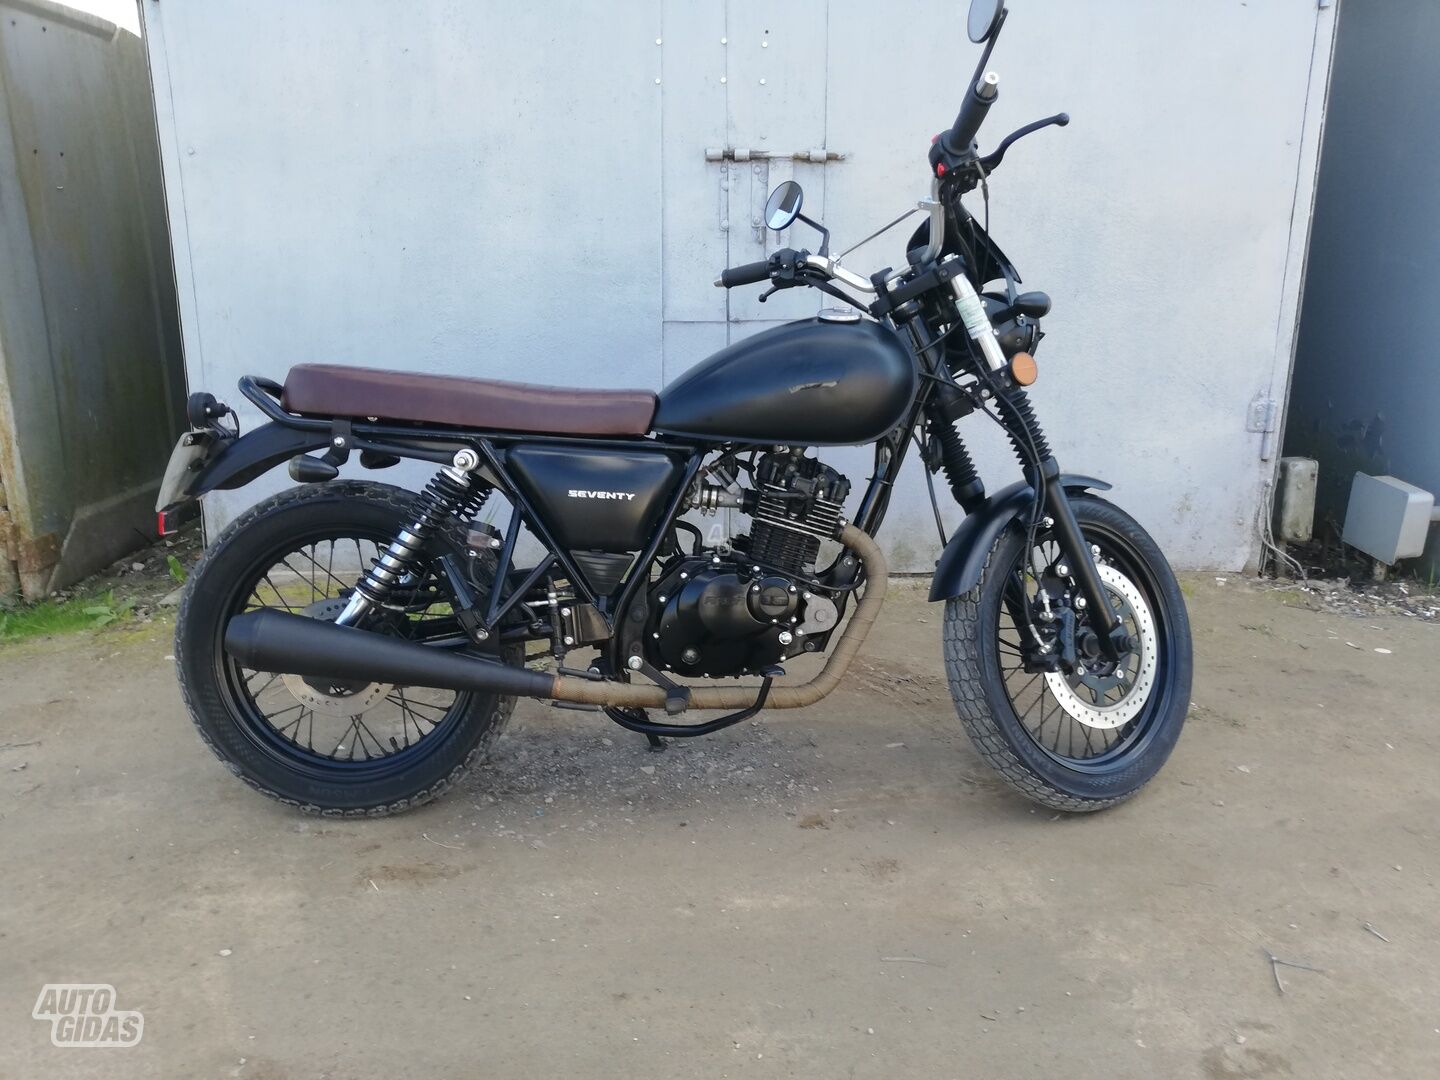 Mash Seventy 2019 y Classical / Streetbike motorcycle